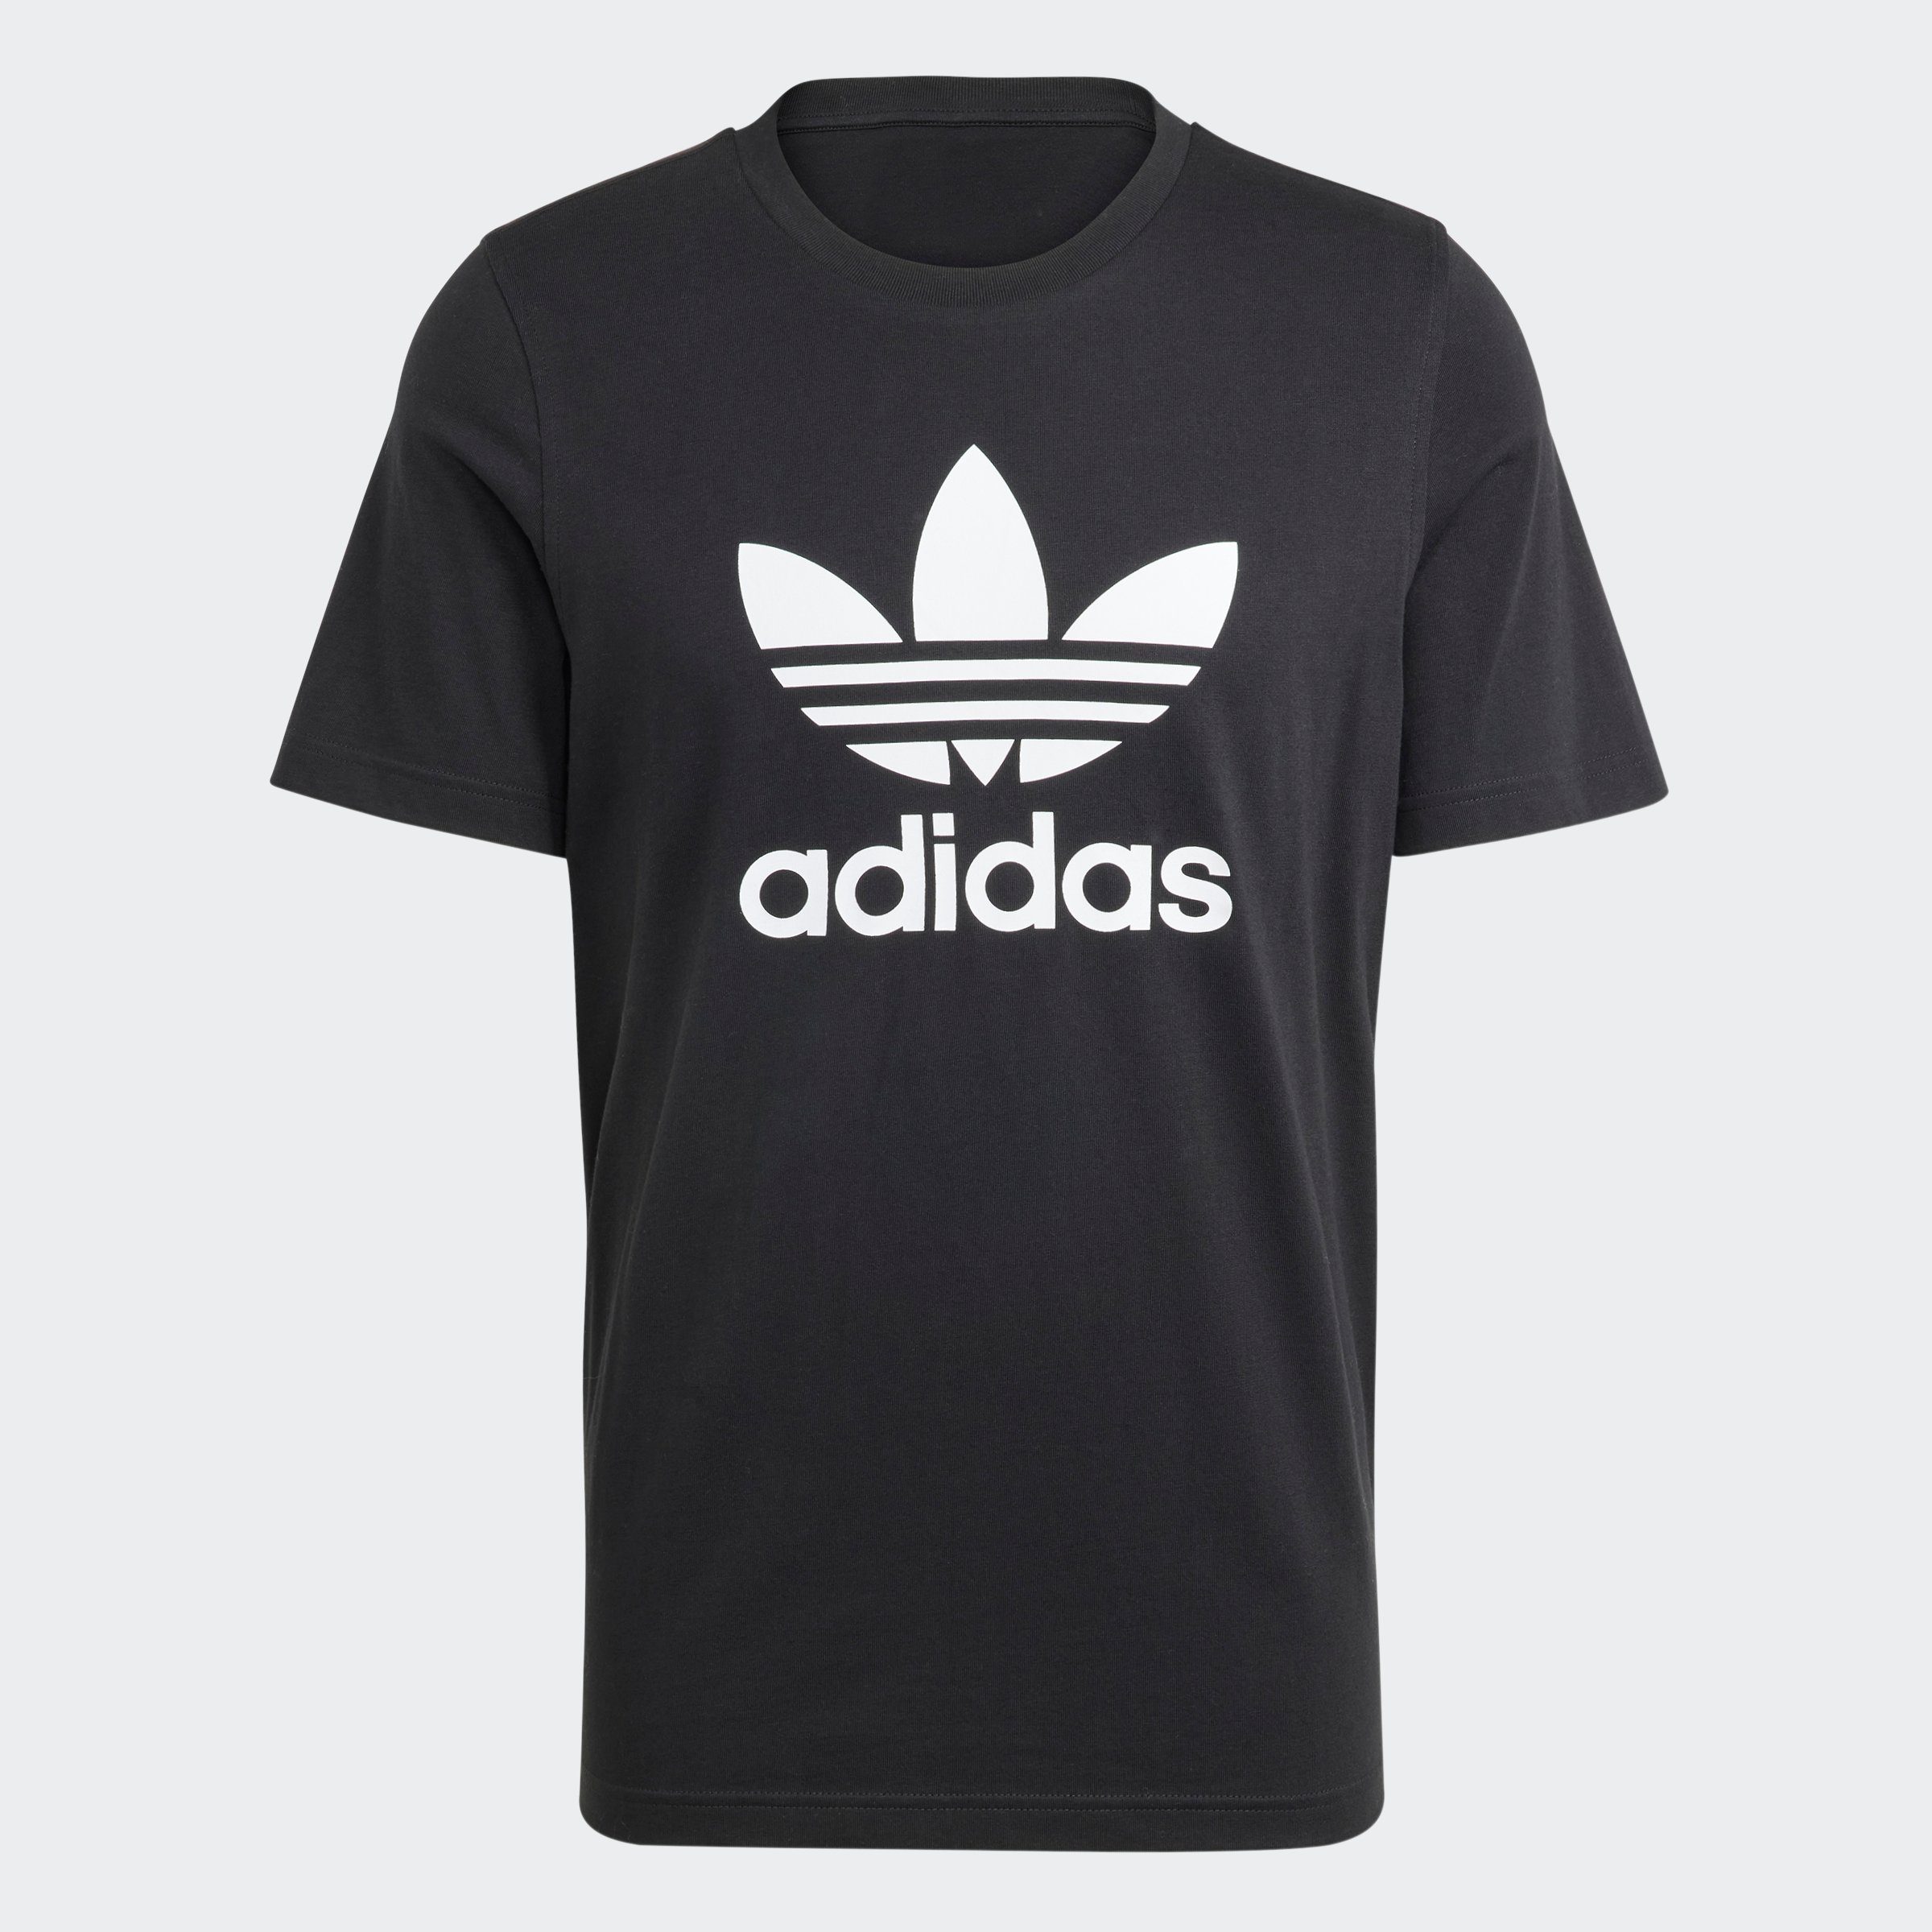 ADICOLOR T-Shirt Originals adidas TREFOIL CLASSICS Black